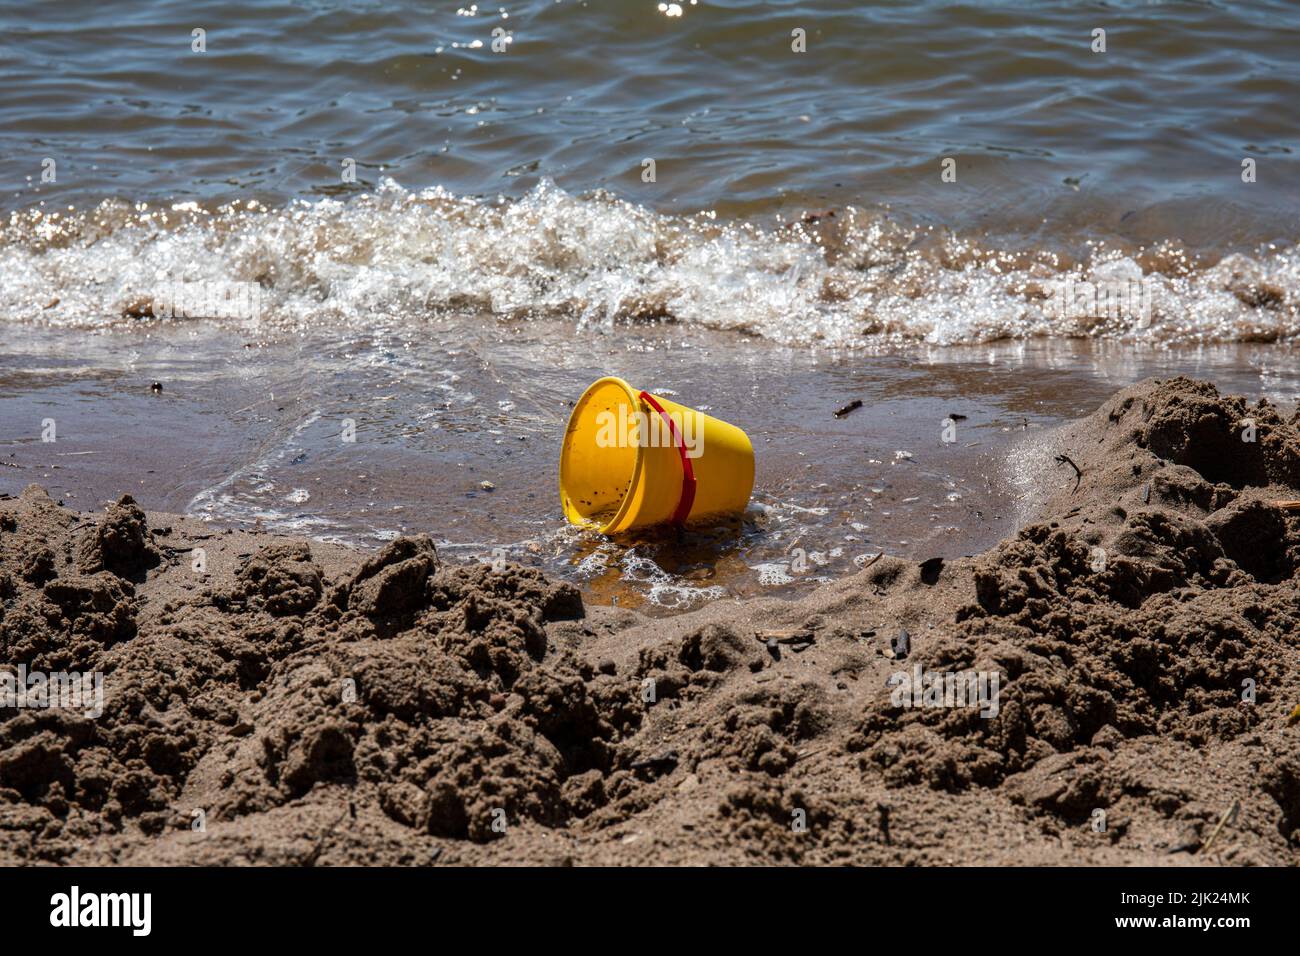 Abandoned yellow plastic beach bucket sand toy on a beach Stock Photo